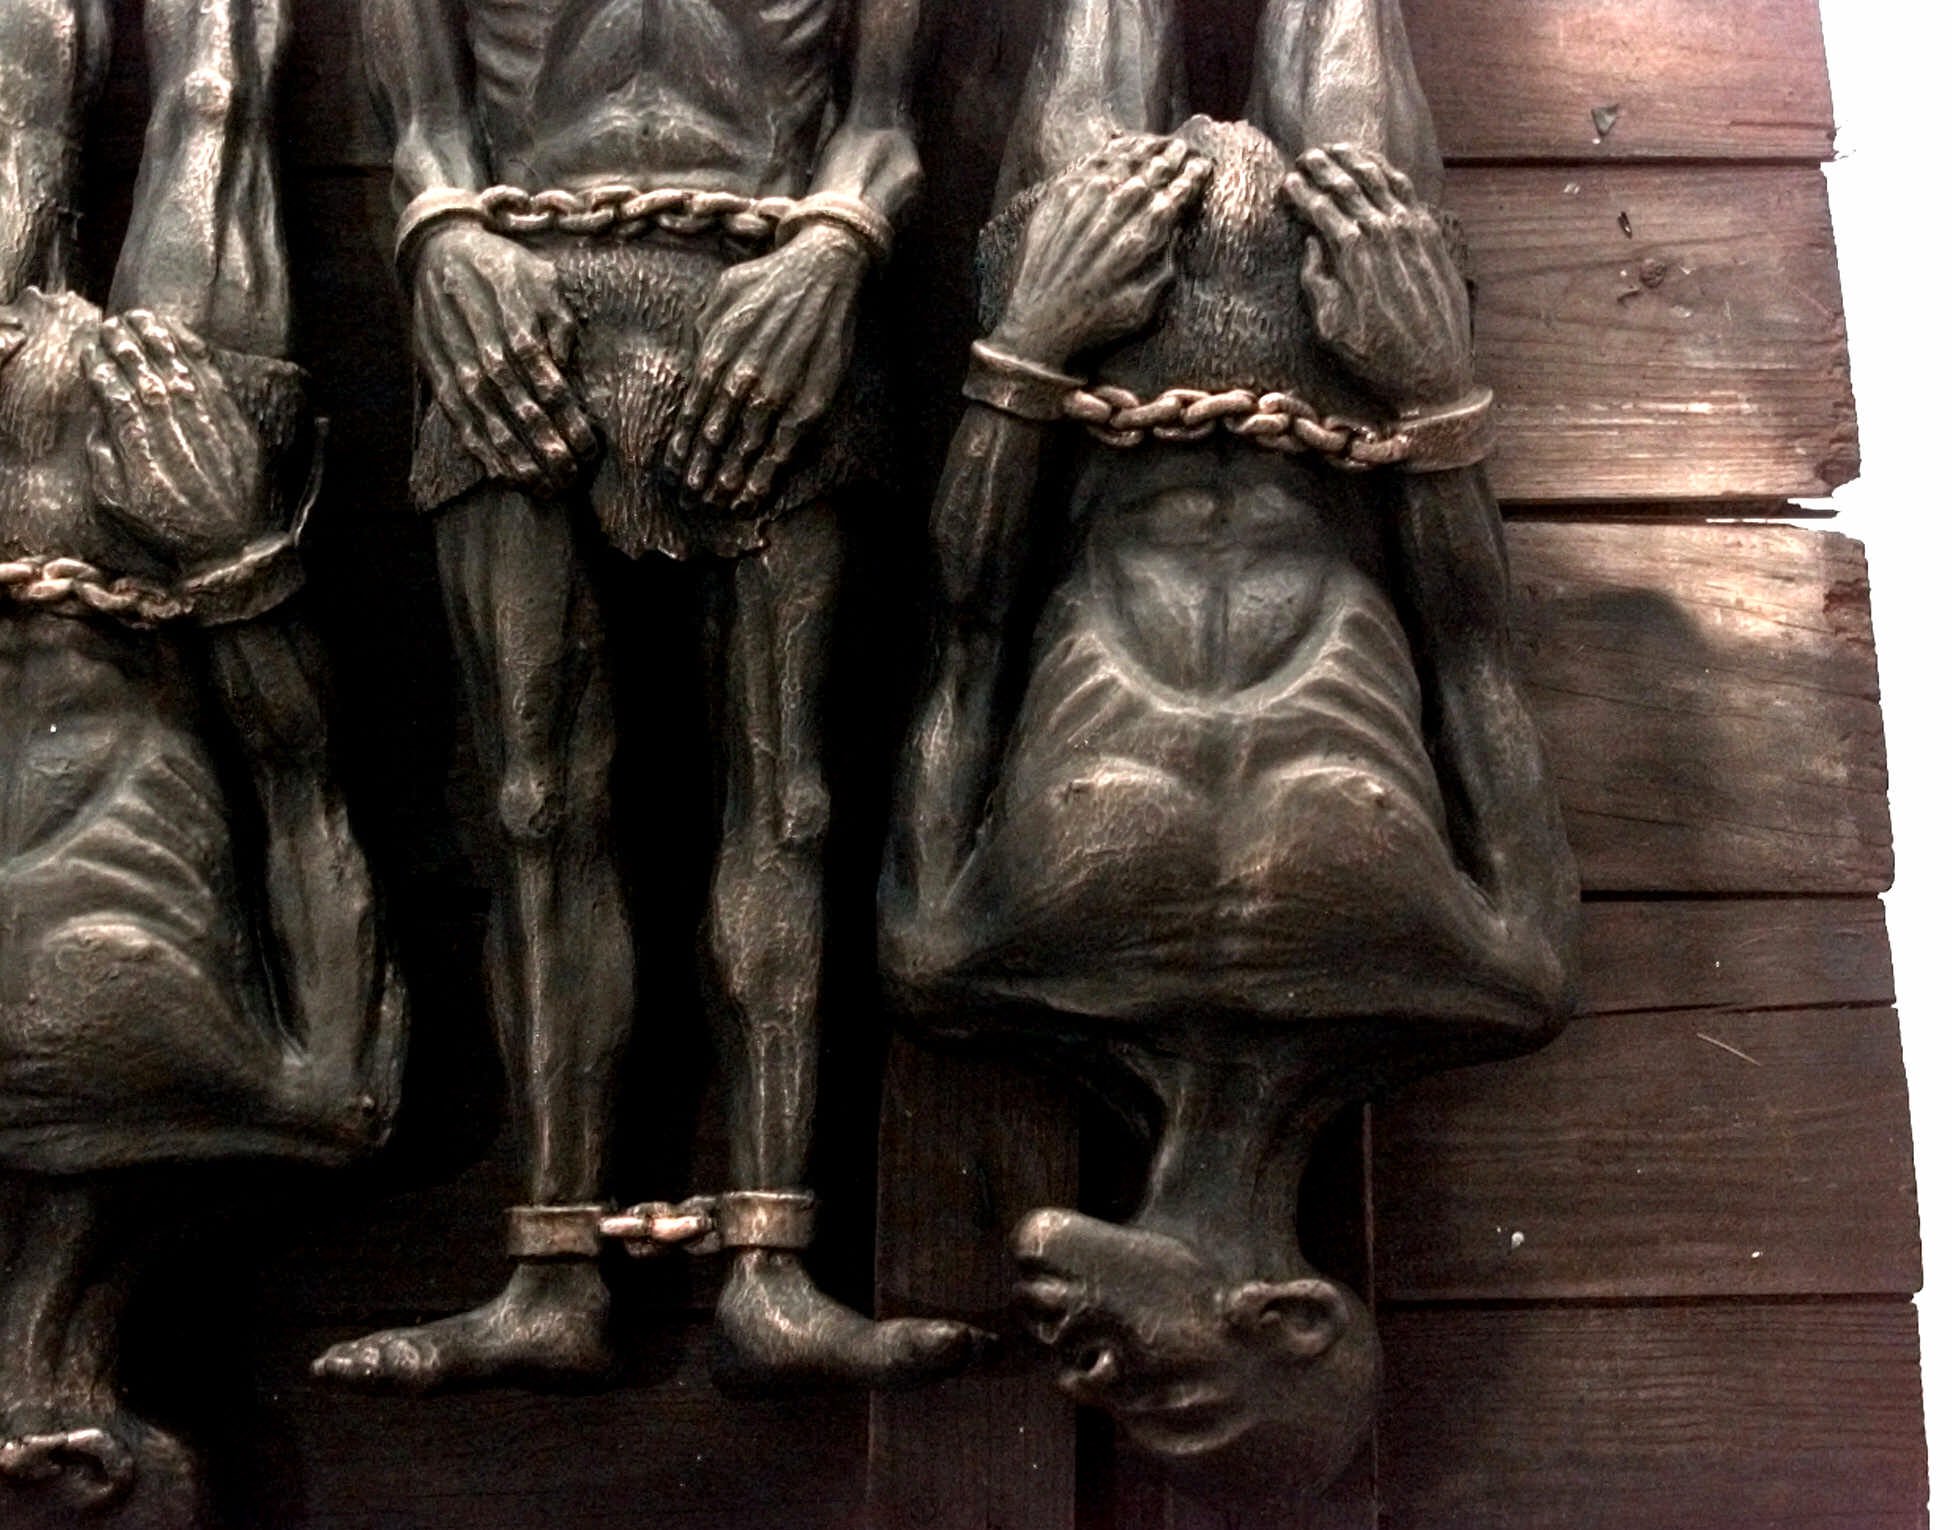 Bronze sculptures of chained slaves by sculptor Bernard Jackson in South Orange, N.J., in 2000.